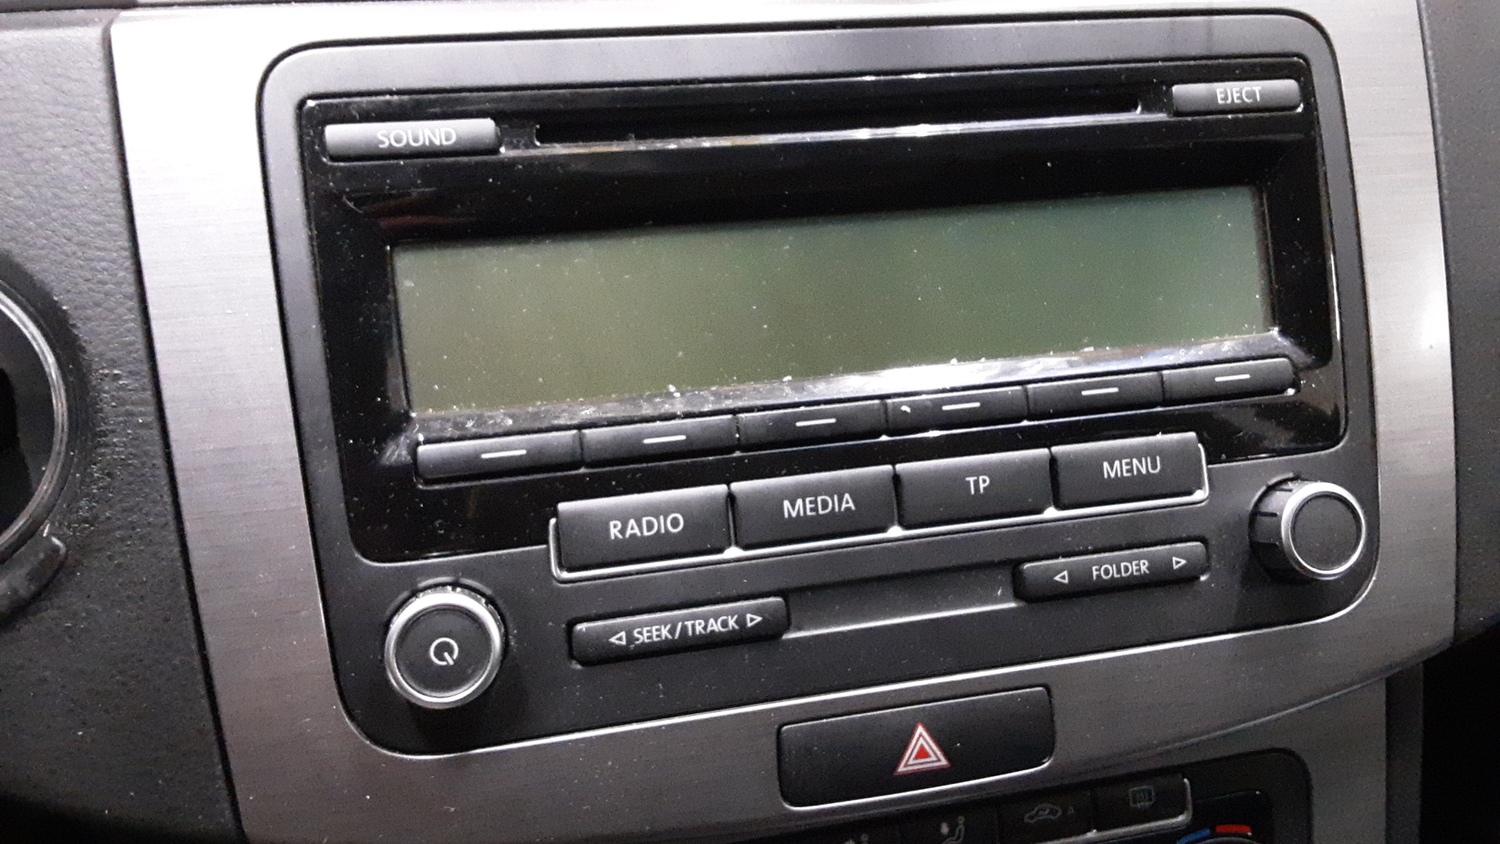 ORIGINAL Audio VW PASSAT (362)  2011 - Bild 1 von 1